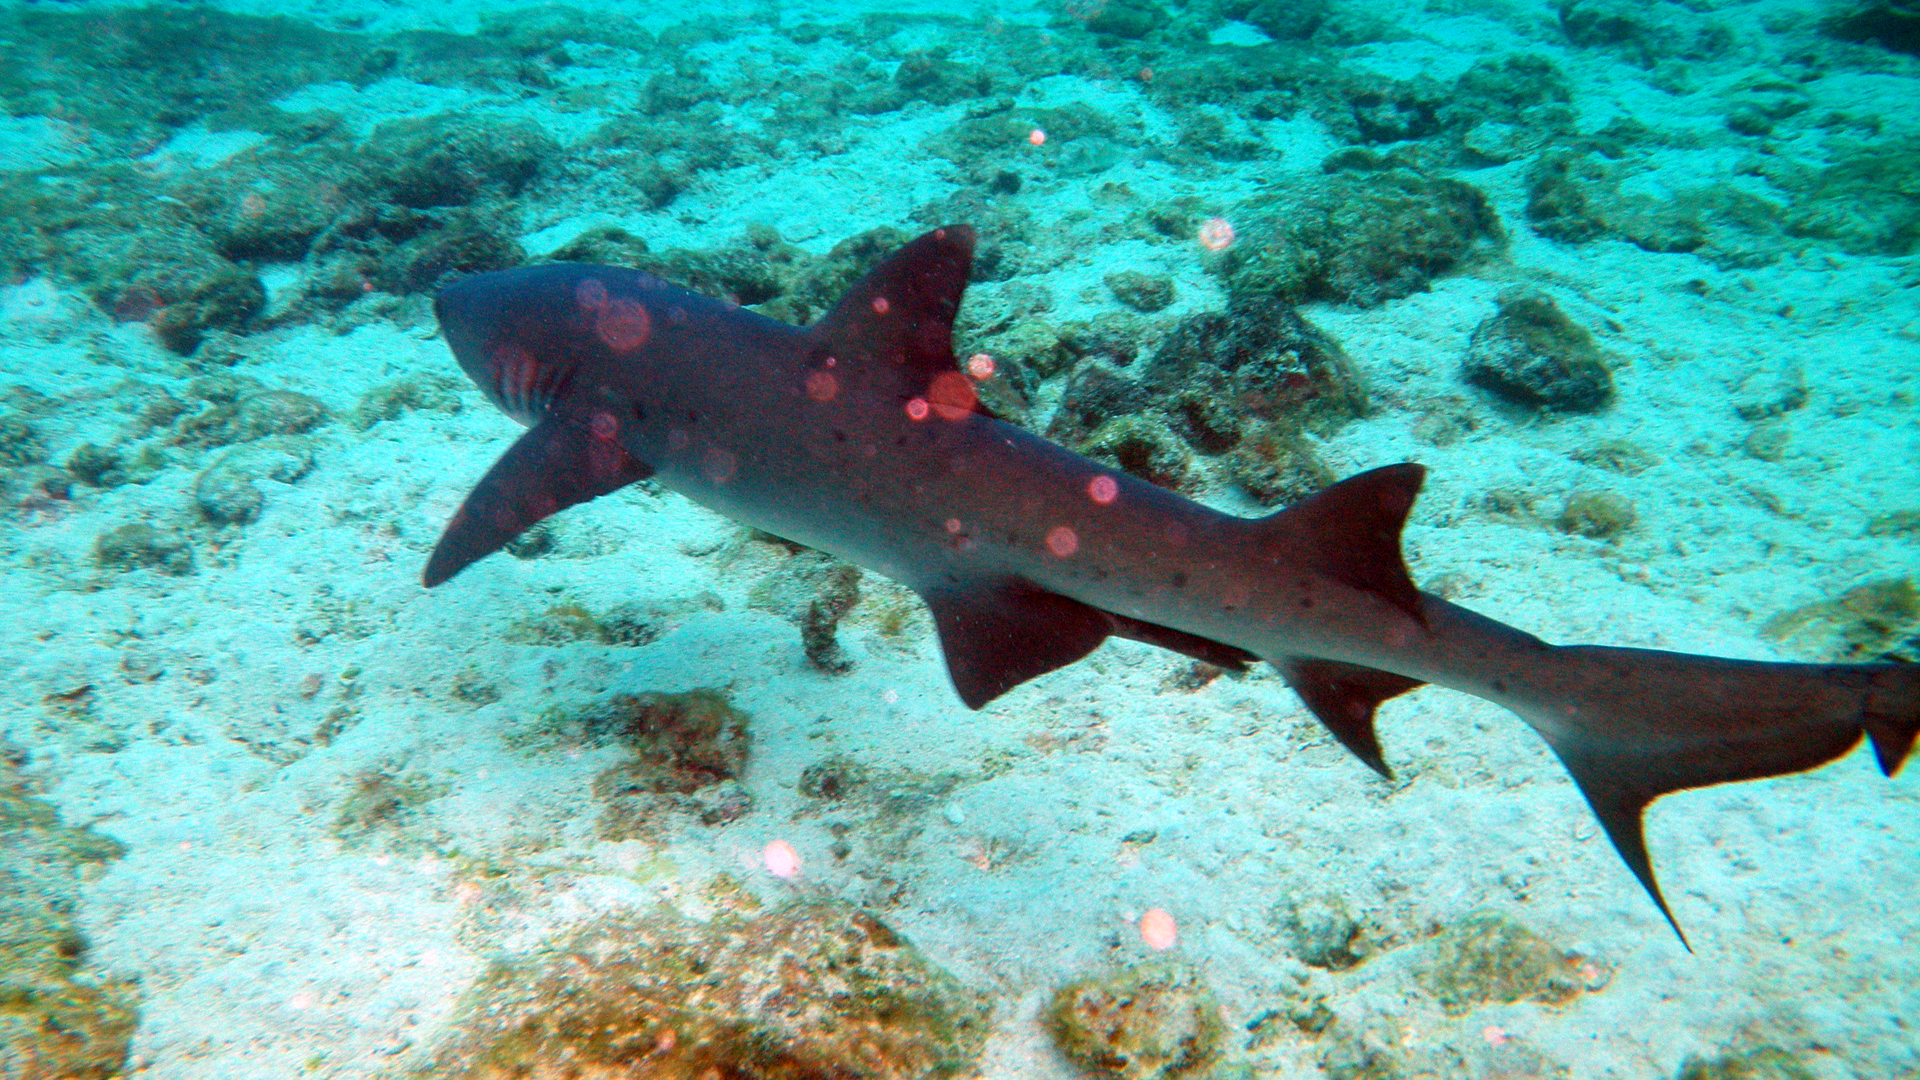 wp-content/uploads/itineraries/Galapagos/032410galapagos_jamescove_underwater_shark (5).JPG